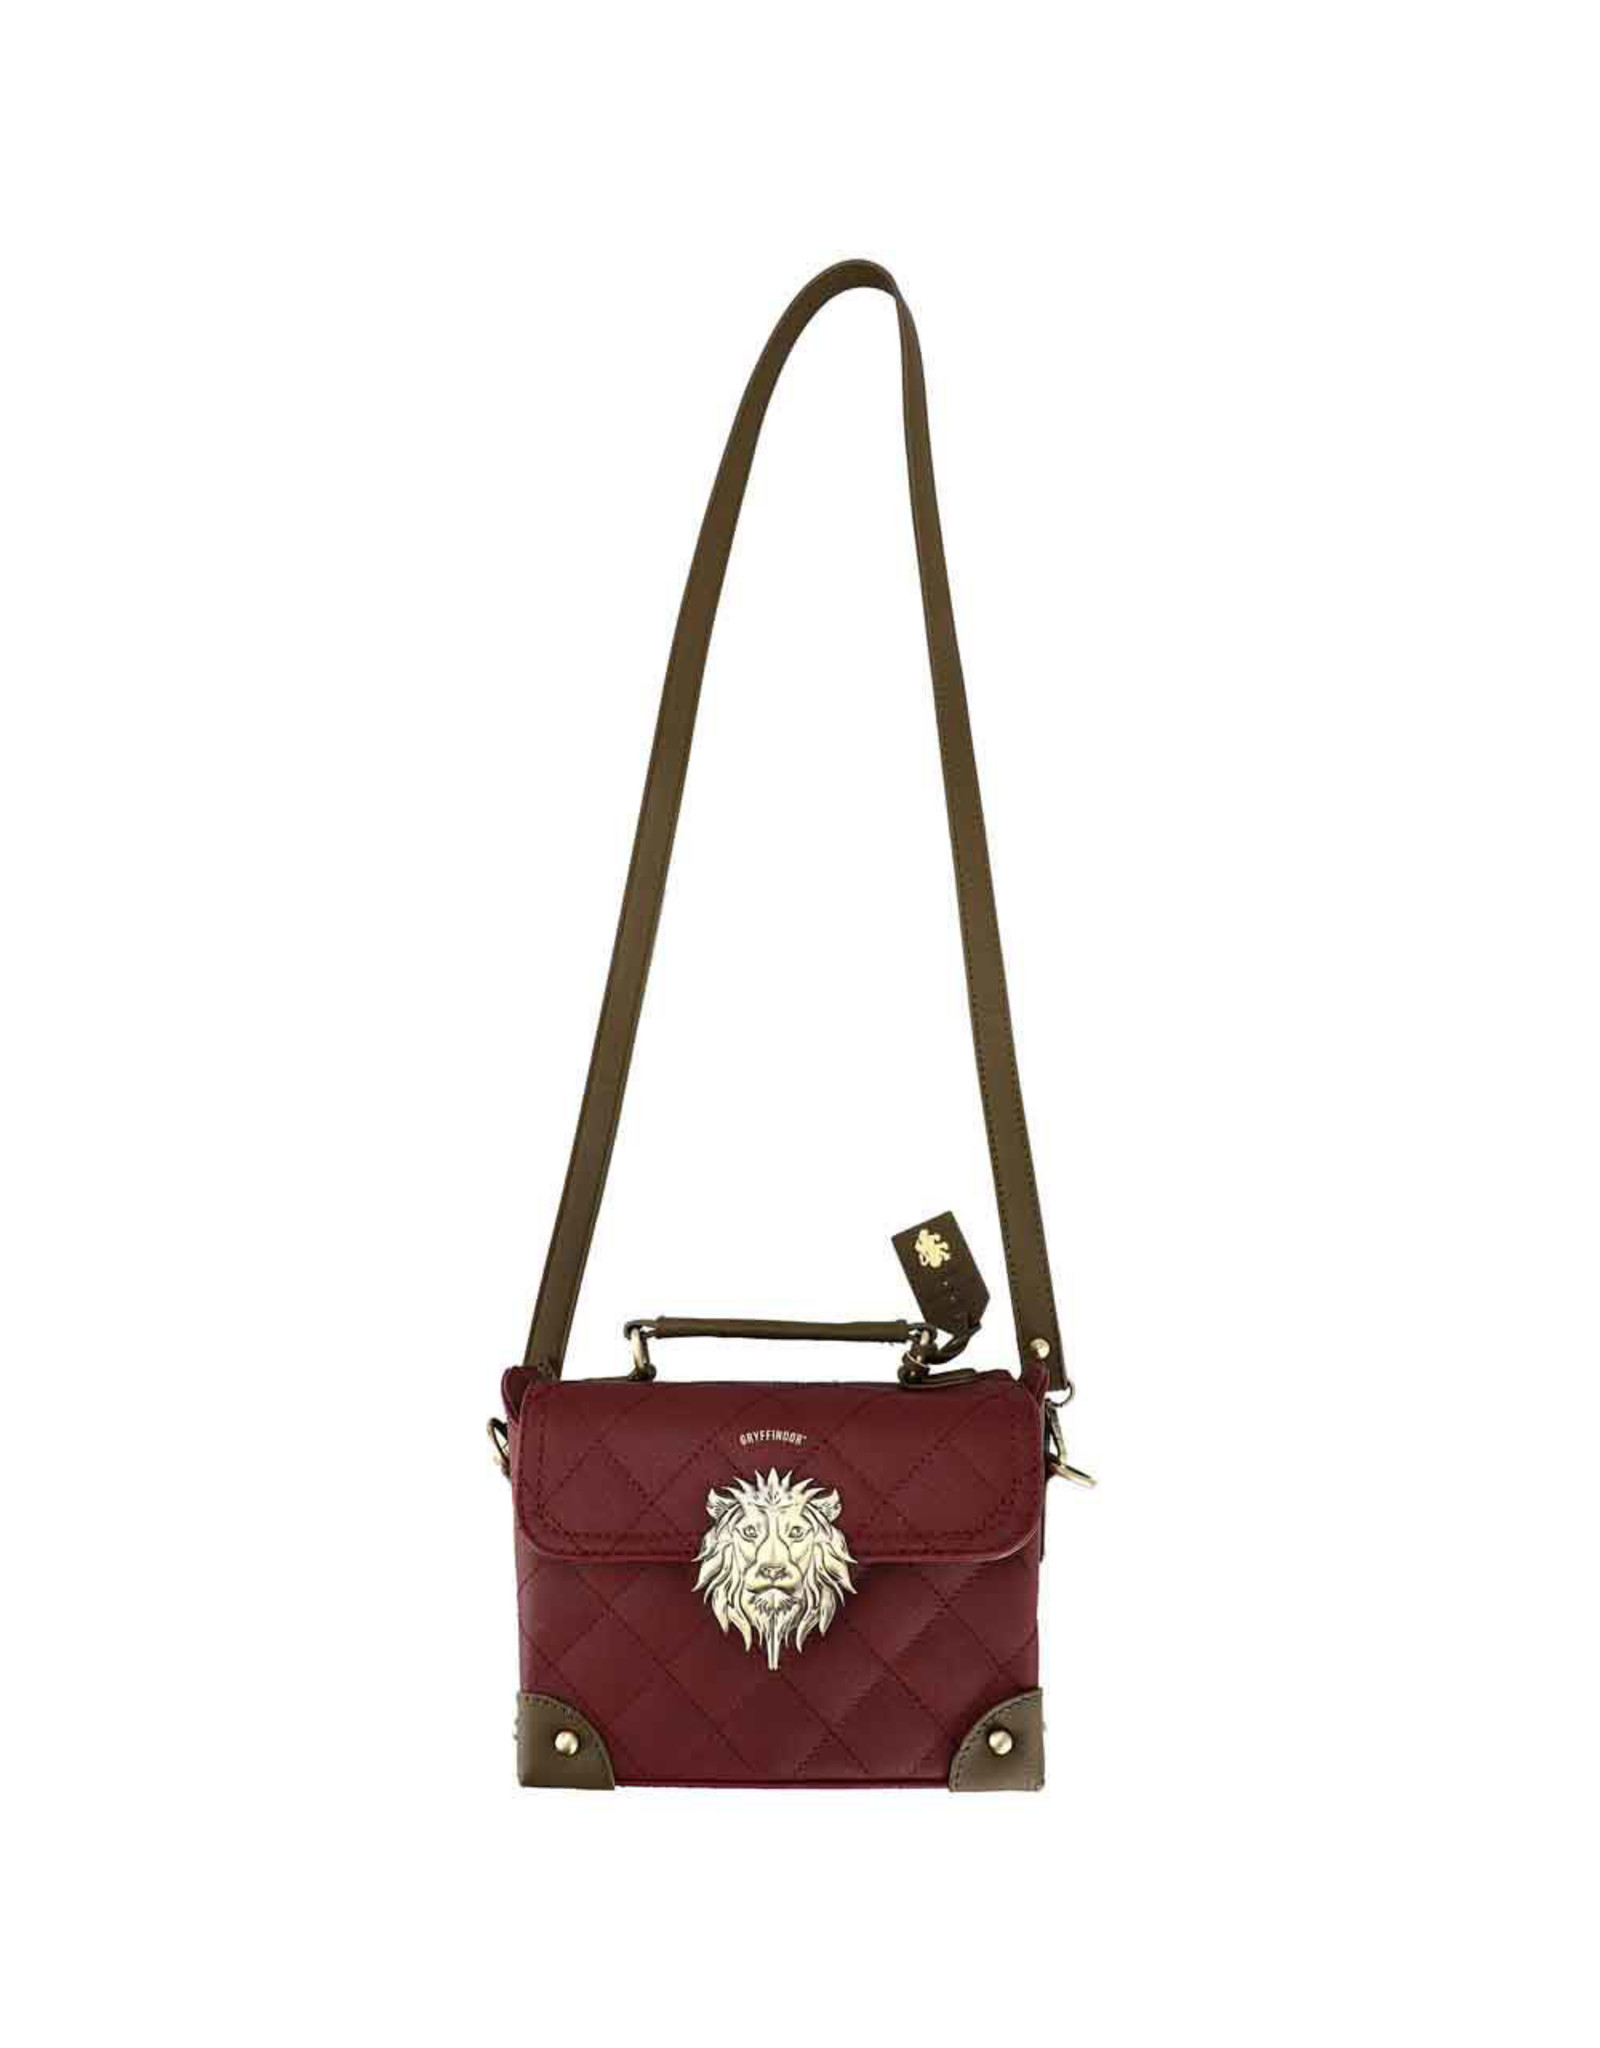 Harry Potter Merchandise - Harry Potter Gryffindor Premium Mini Trunk Cross Body Handbag